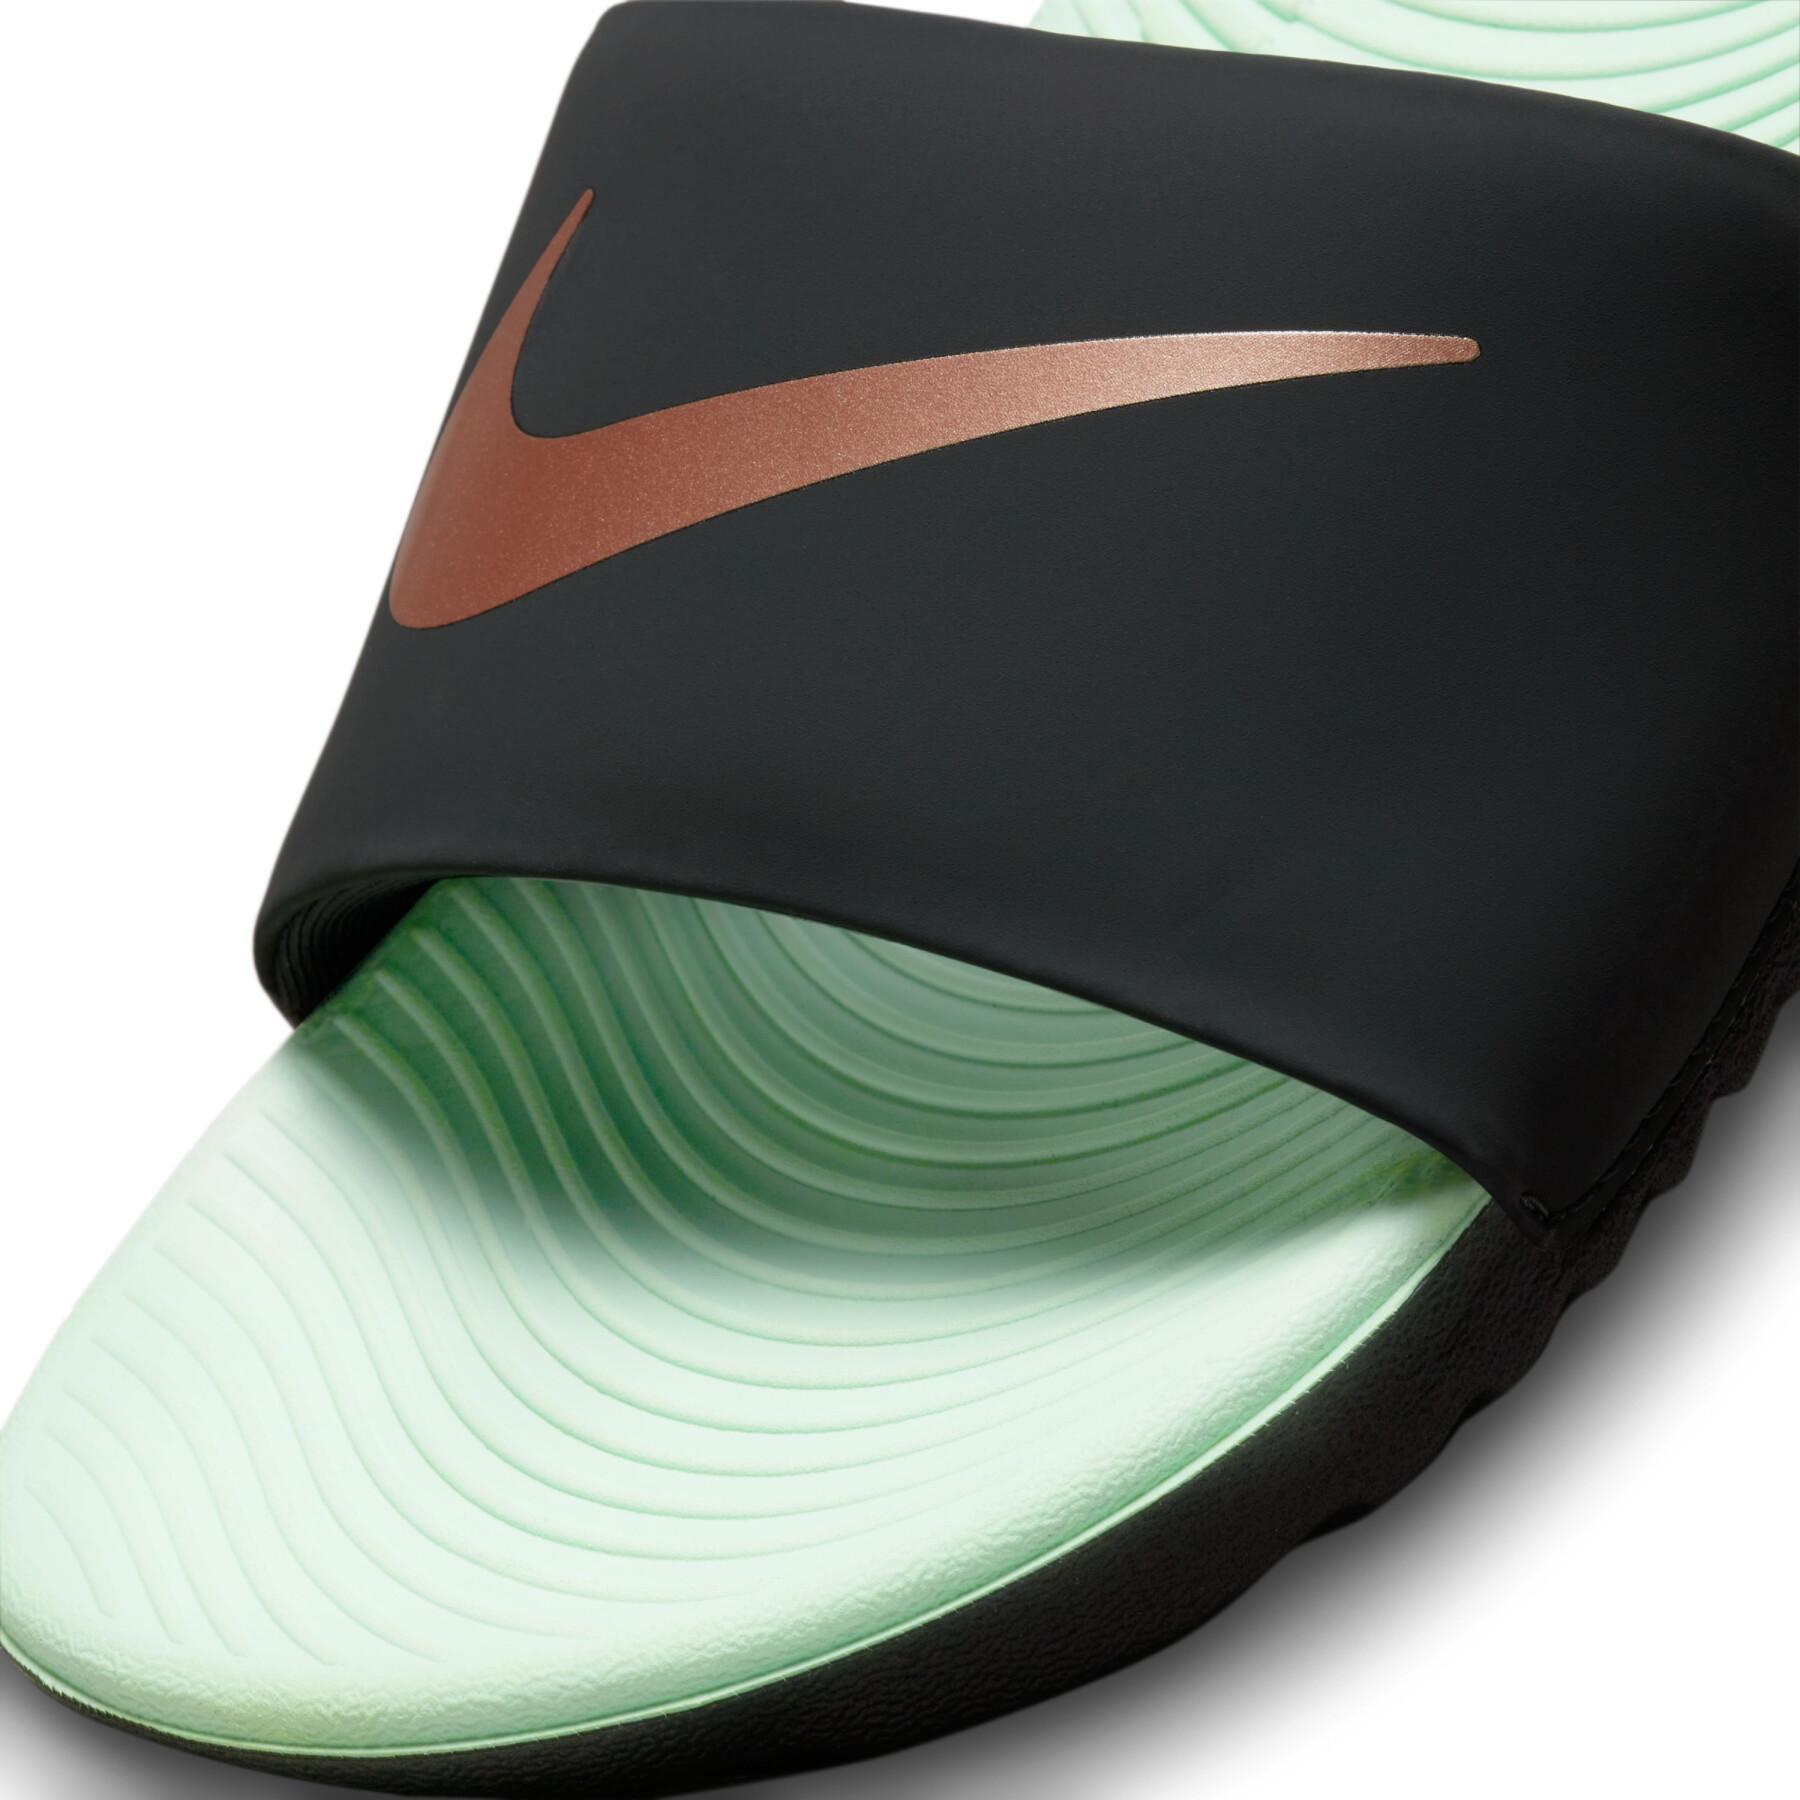 Zapatillas de casa para niños Nike Kawa